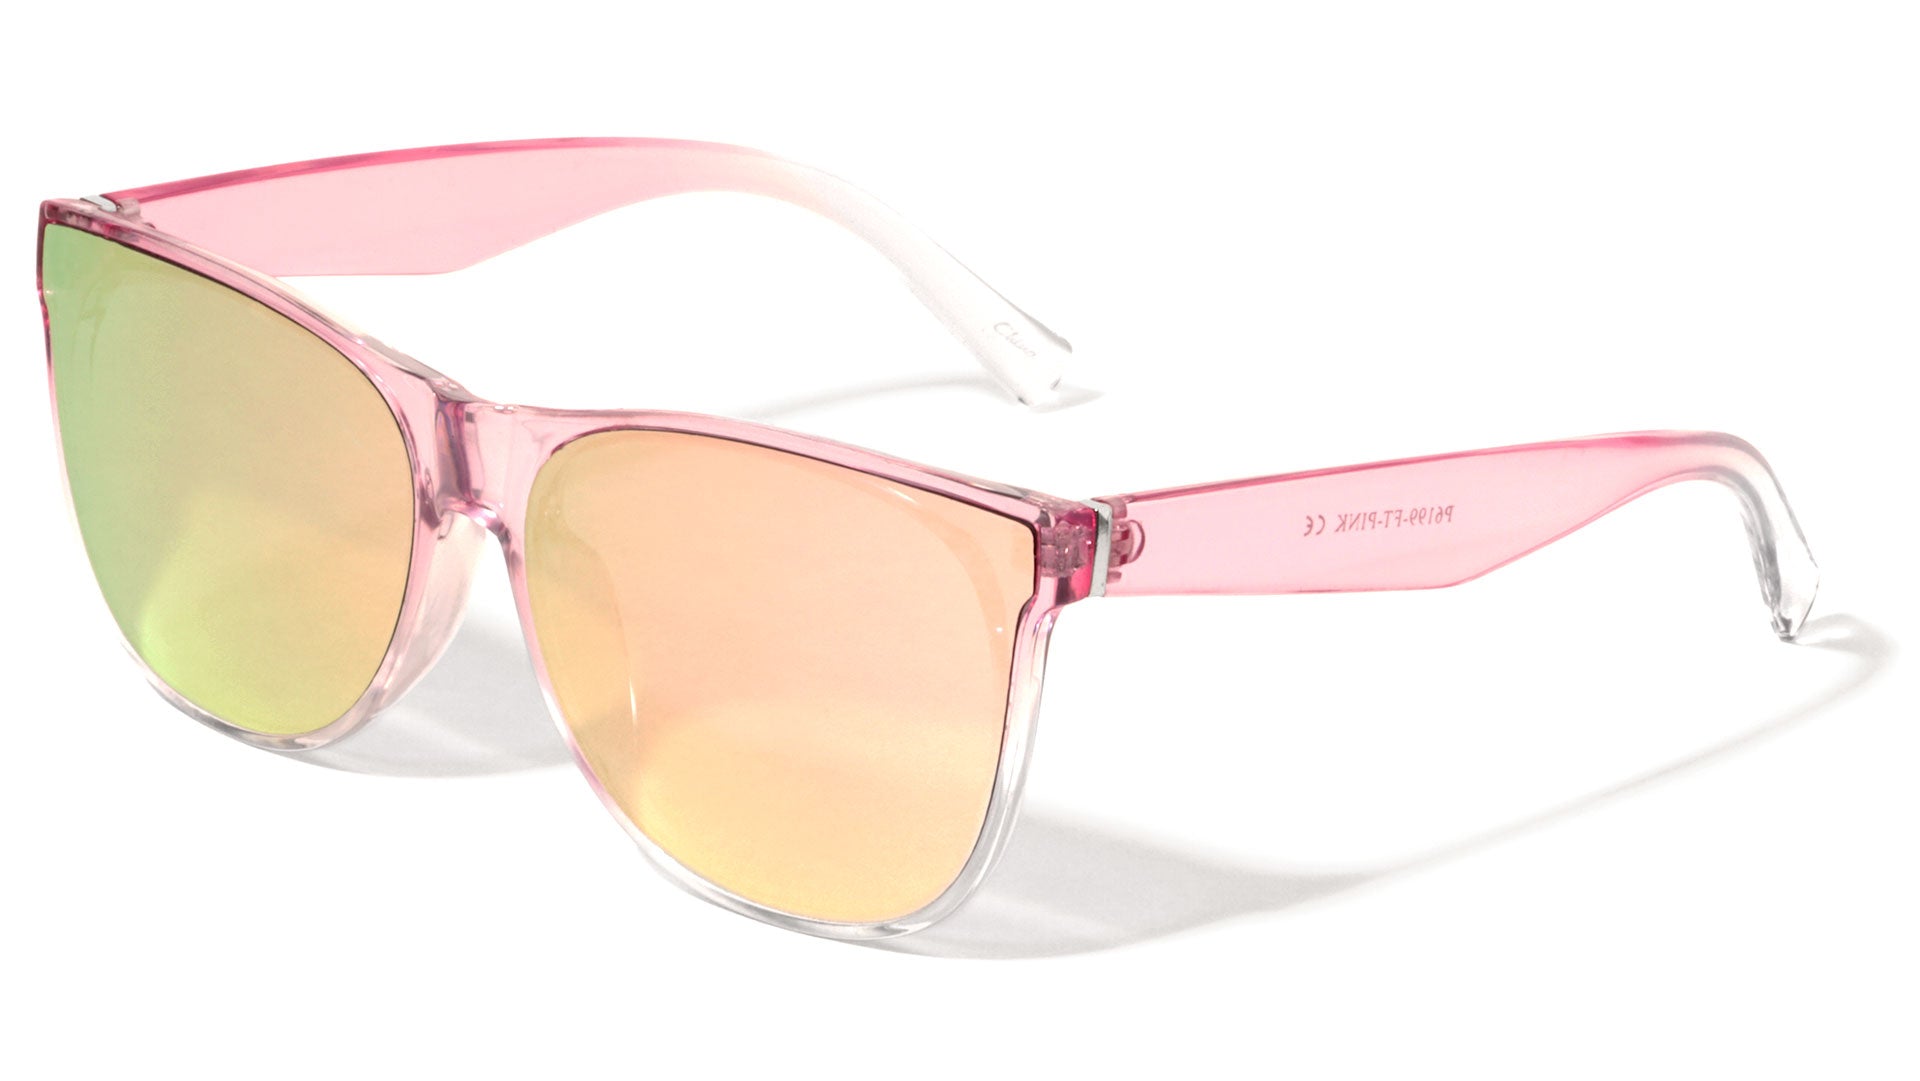 pink sunglasses transparent